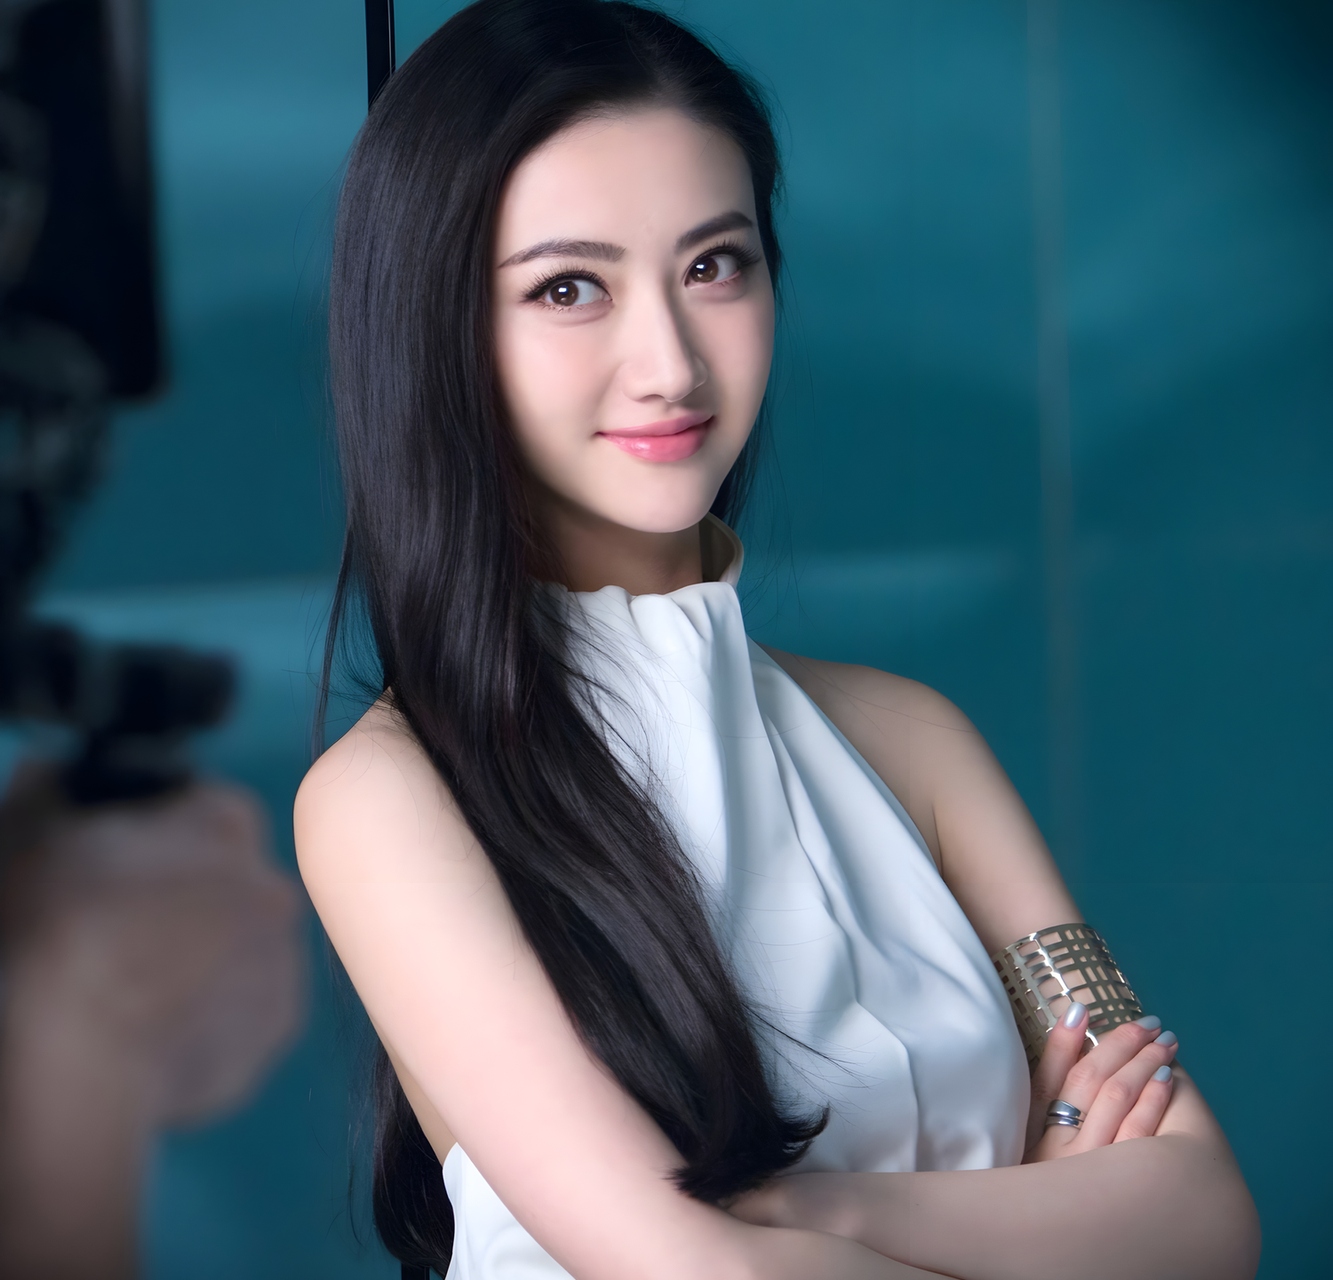 Jing Tian Women Actress Chinese Asian Dark Hair Long Hair Smiling 1333x1280